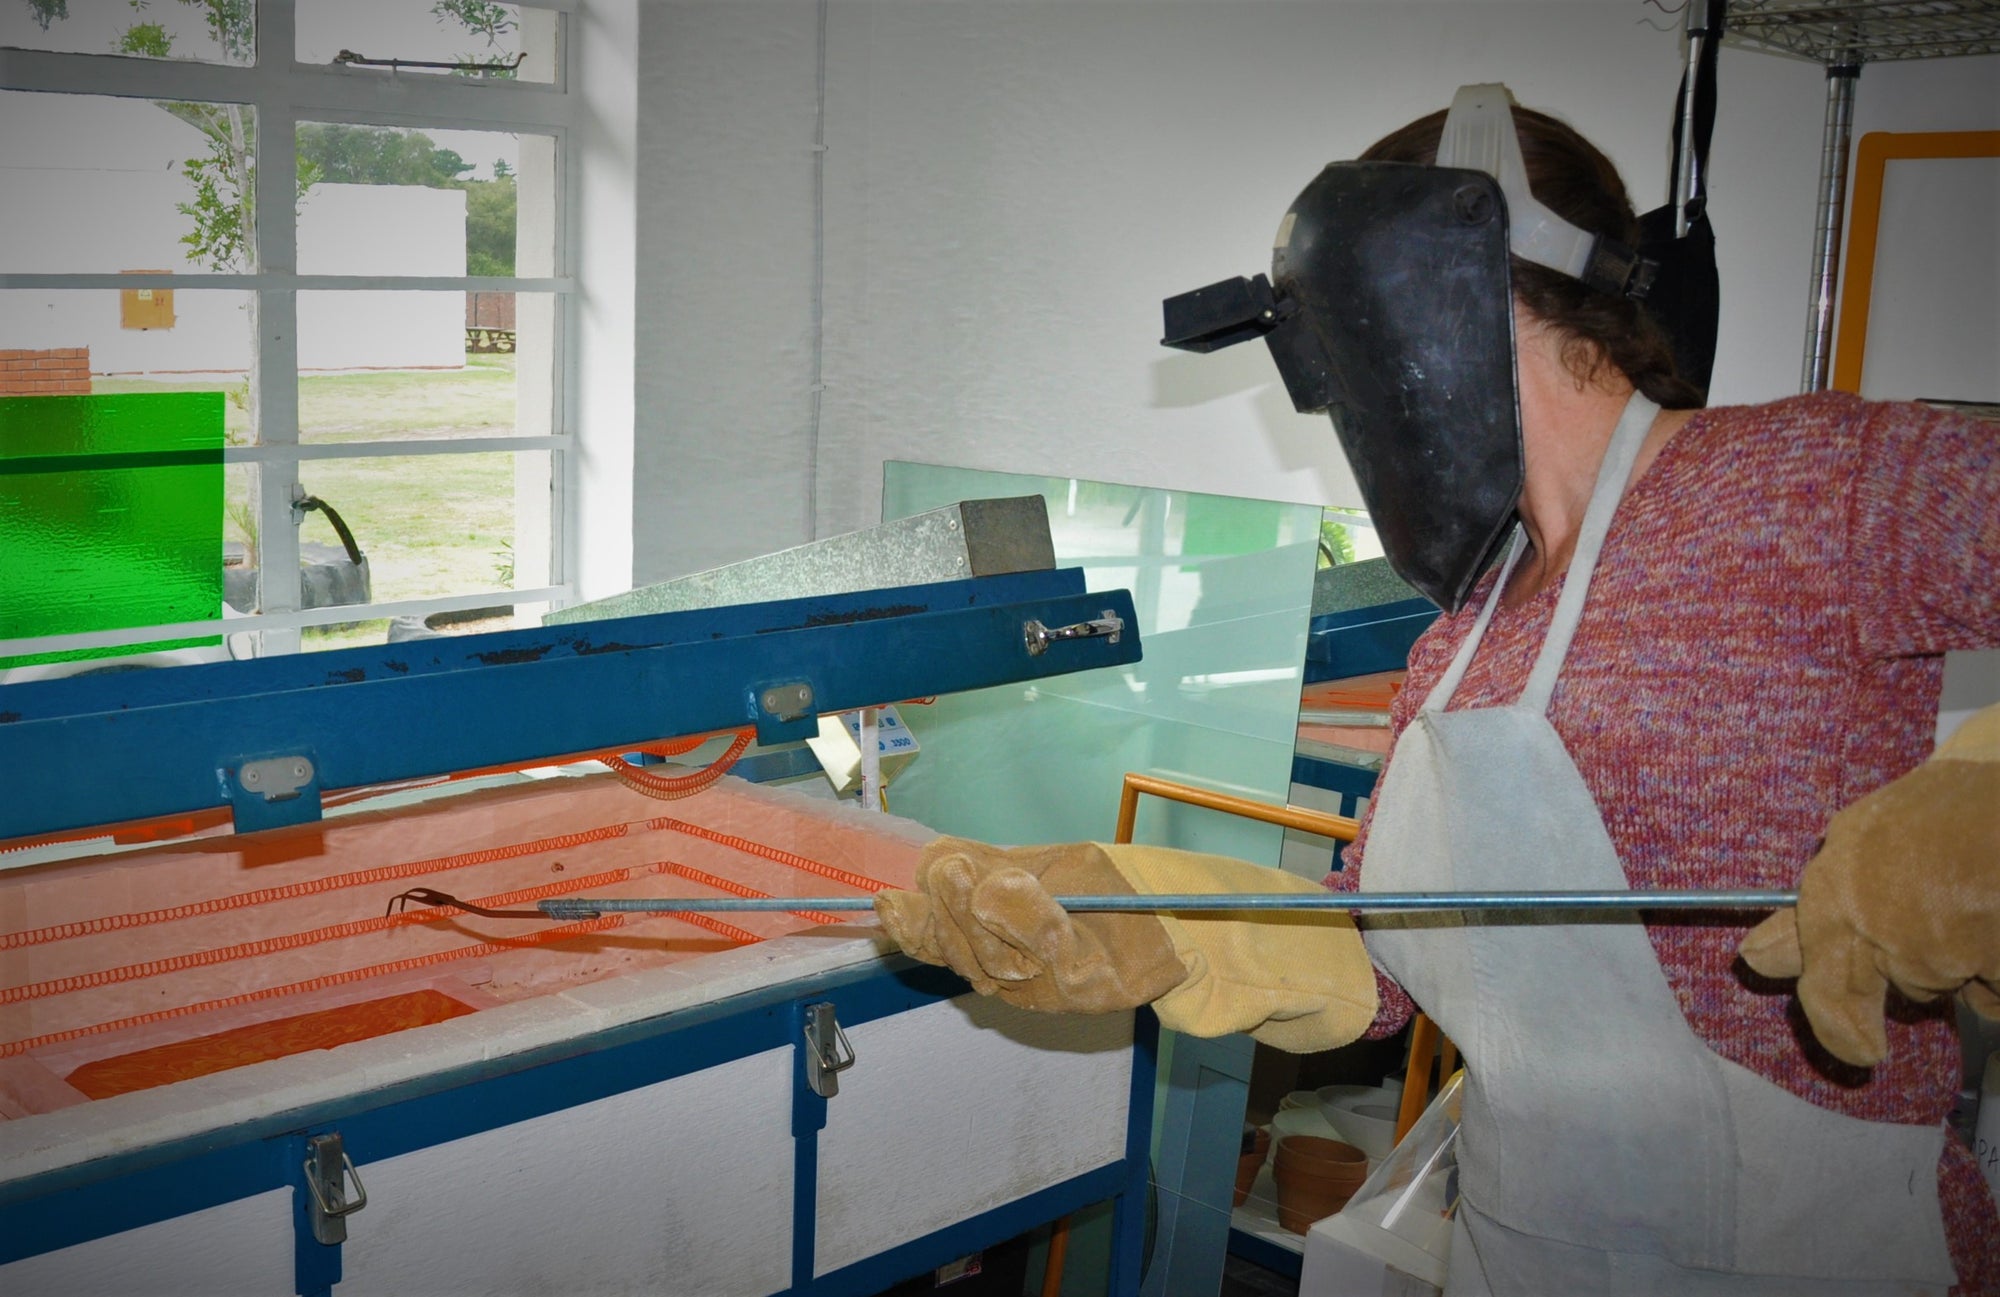 glass artist Helga Stassen combing fused glass art in a kiln in her studio in Sedgefield, South Africa